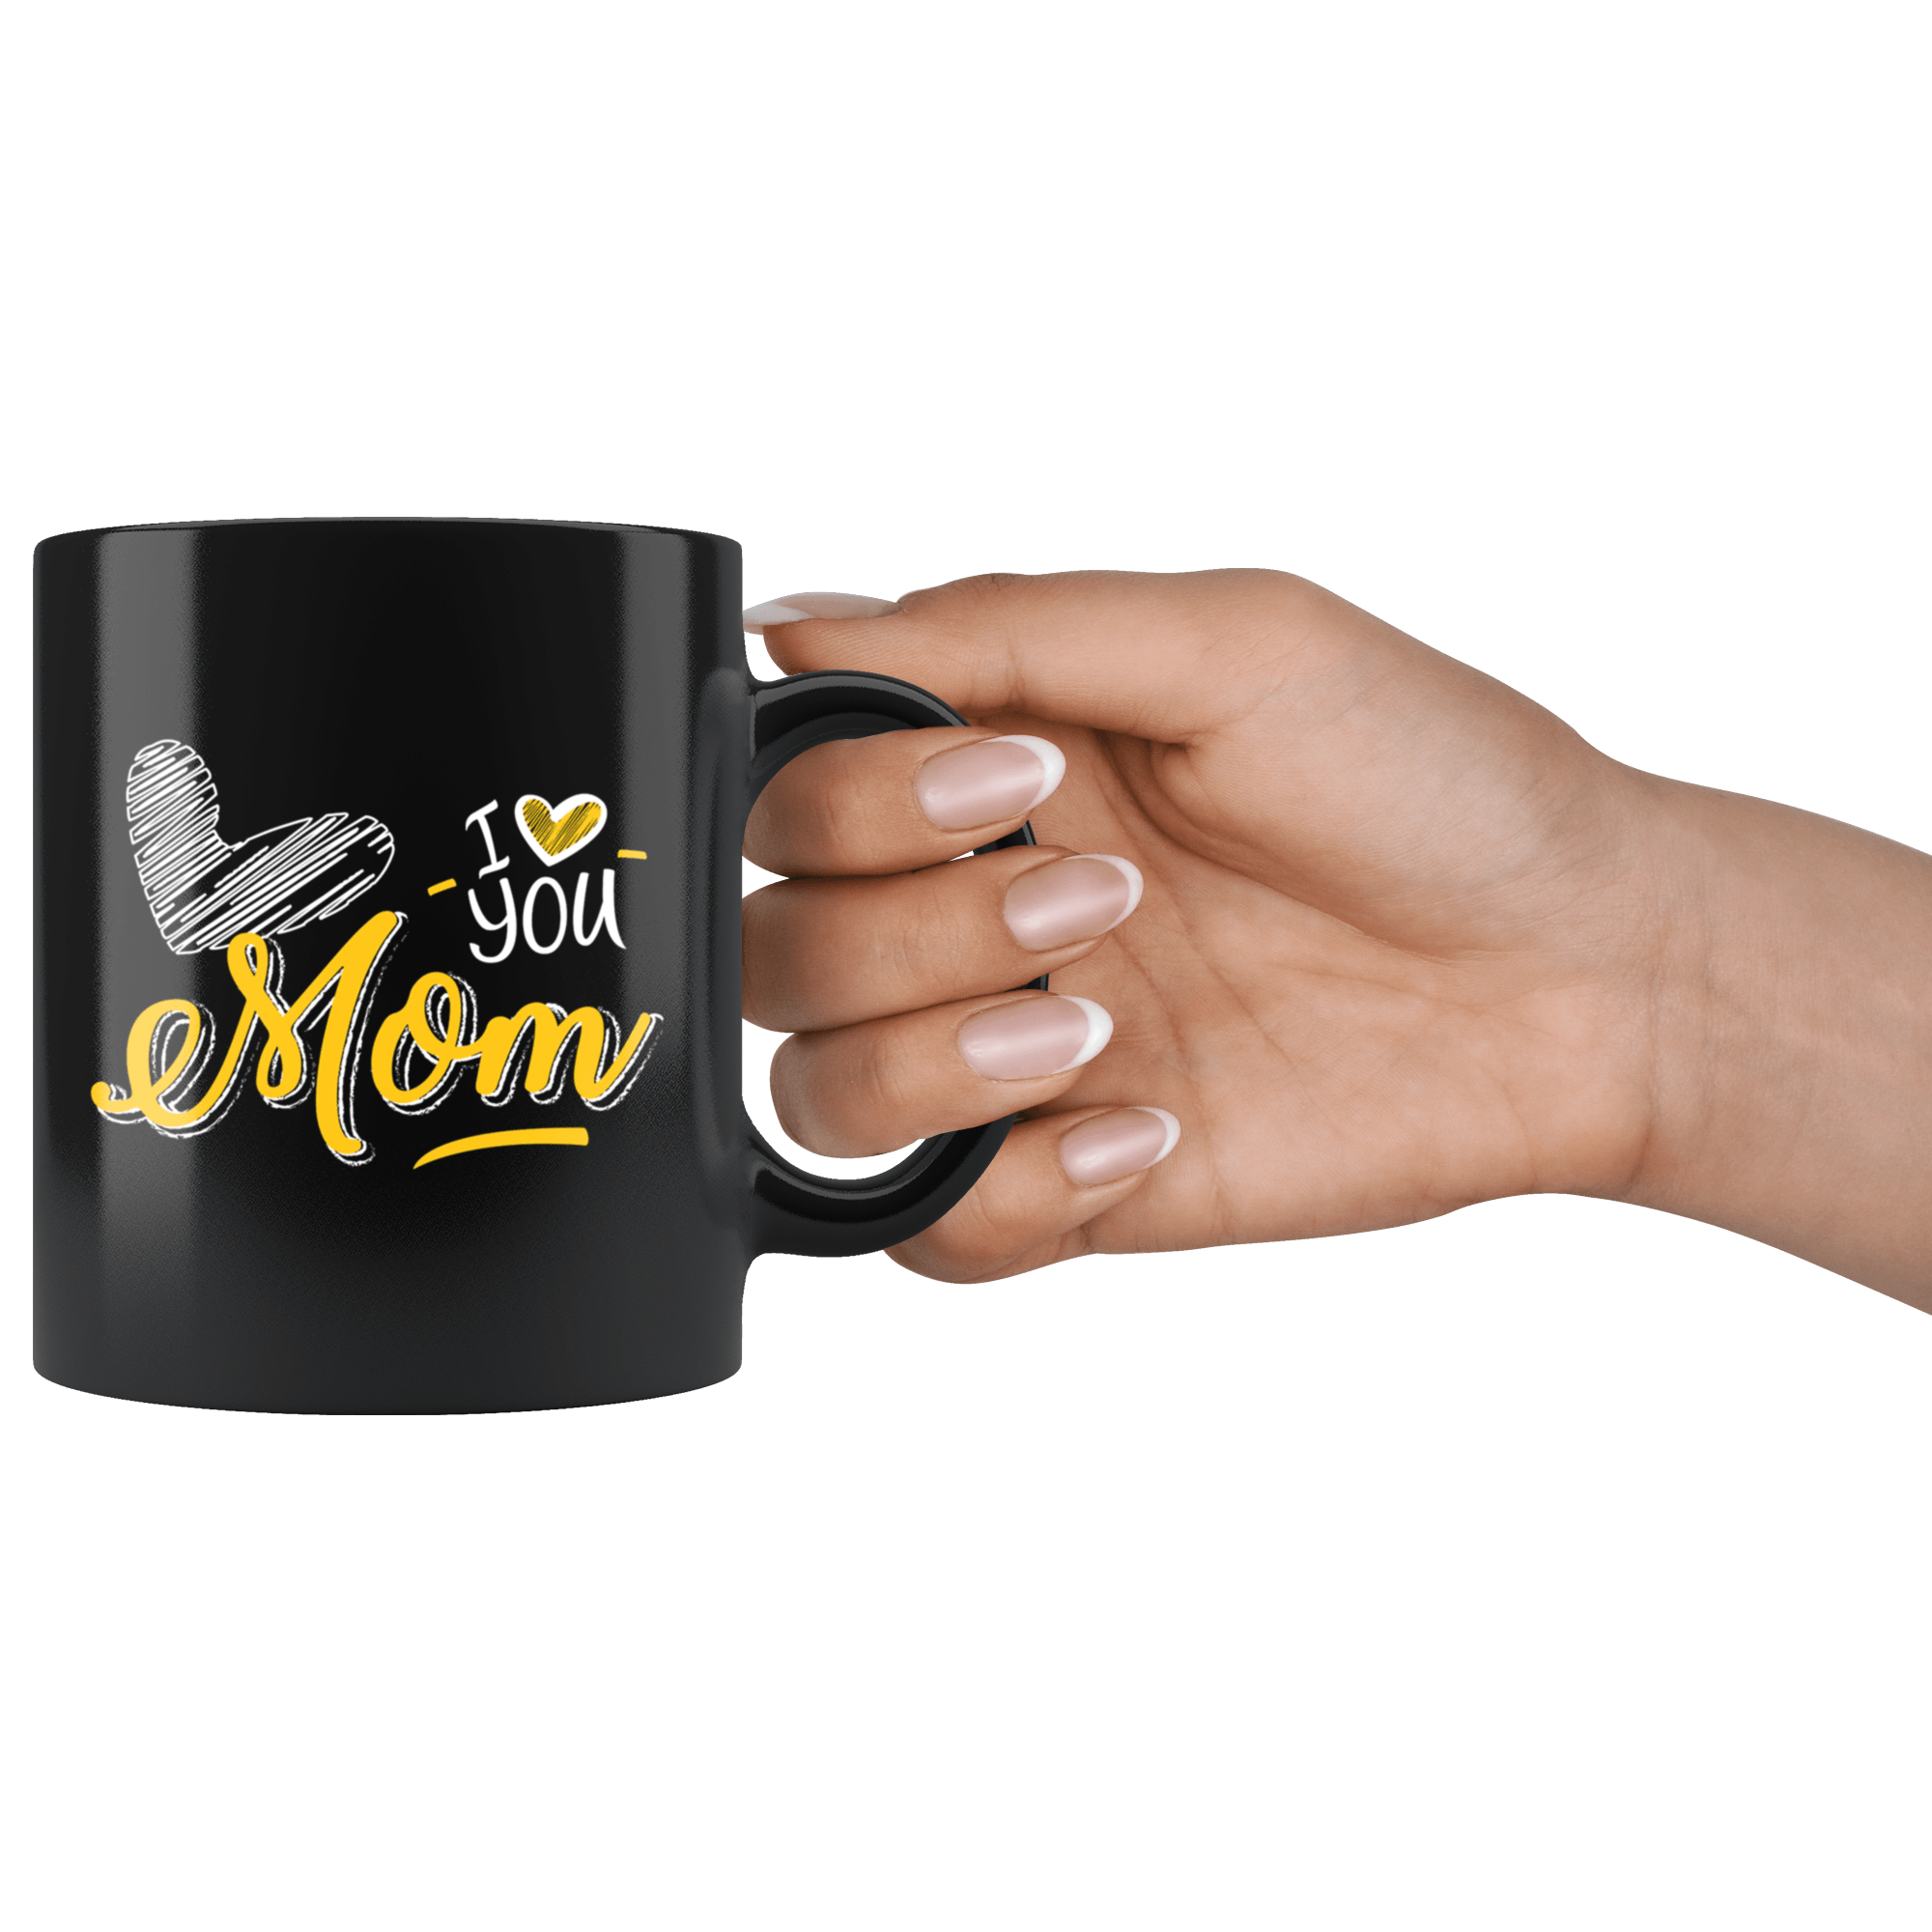 Dark Lolbit White Mug Coffee Cup Tea Milk Cups Birthday Gift Mugs